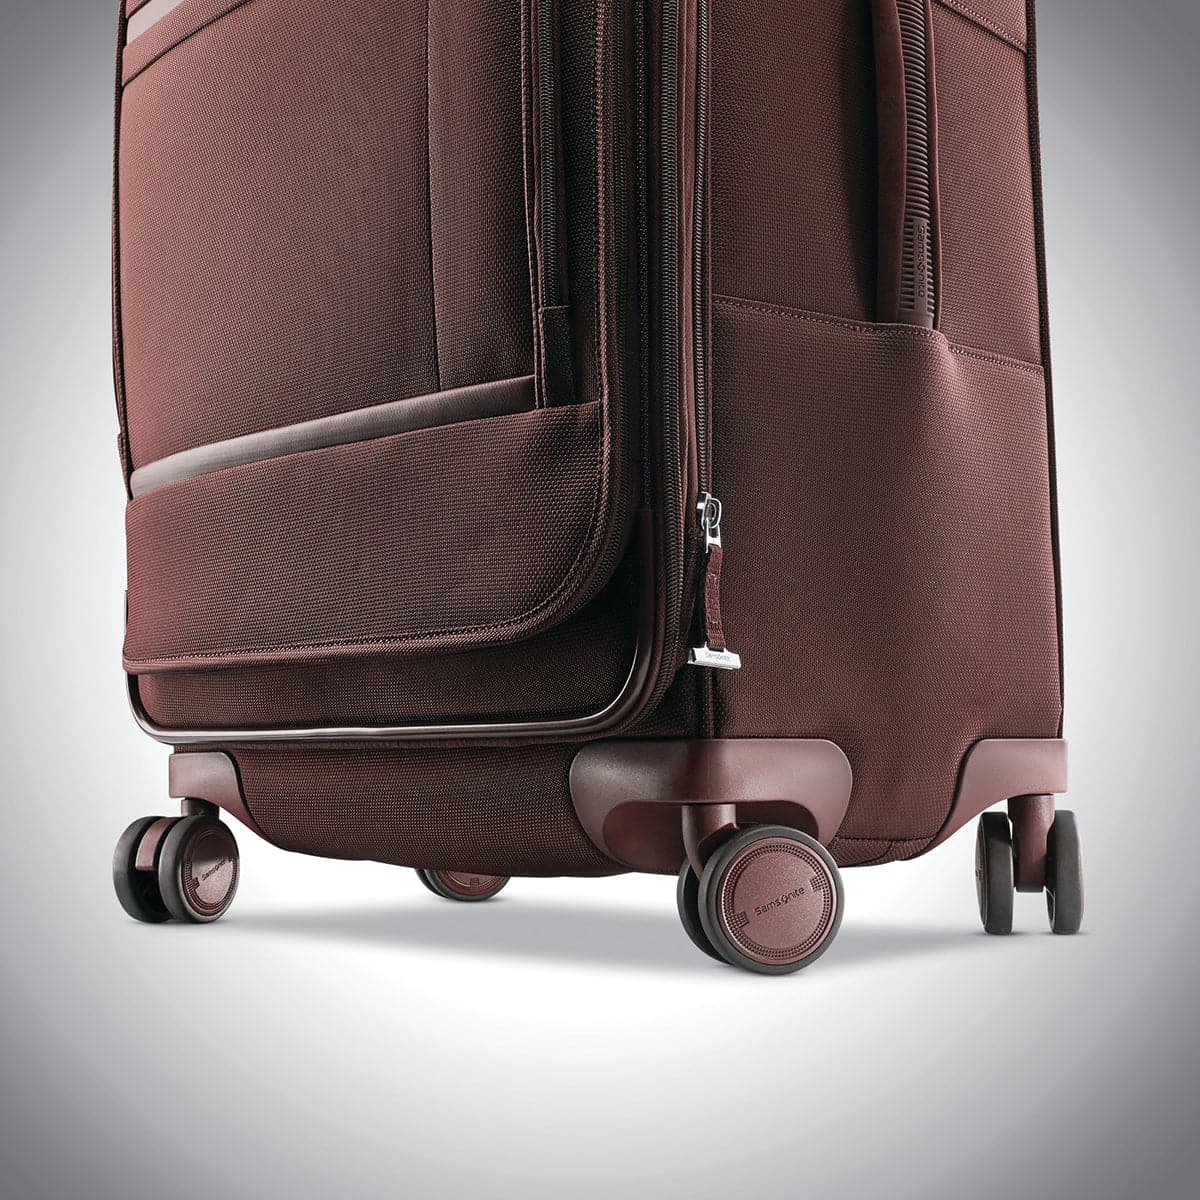 Samsonite Insignis Softside 25" Spinner Carry-On Luggage